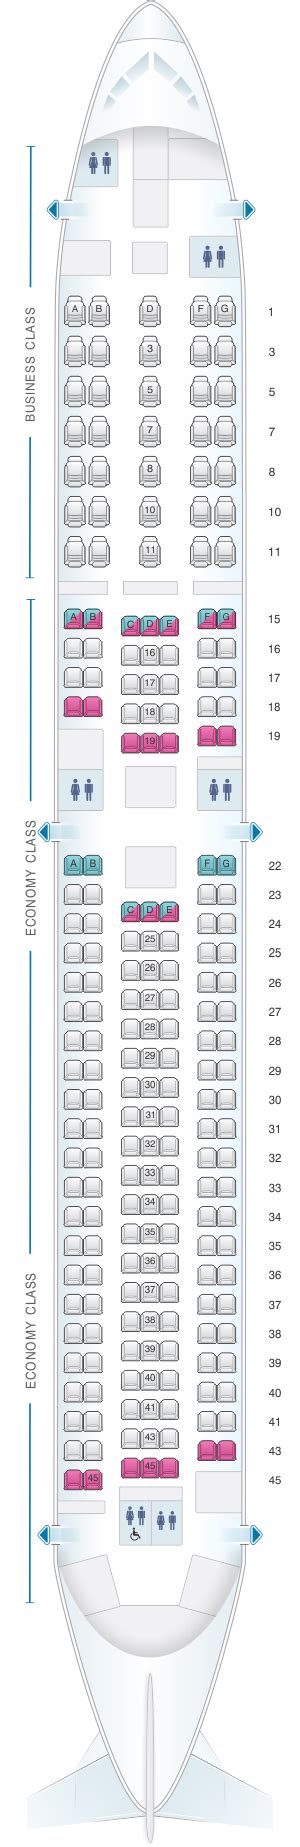 Seat Map Ana All Nippon Airways Boeing B767 300er 214pax